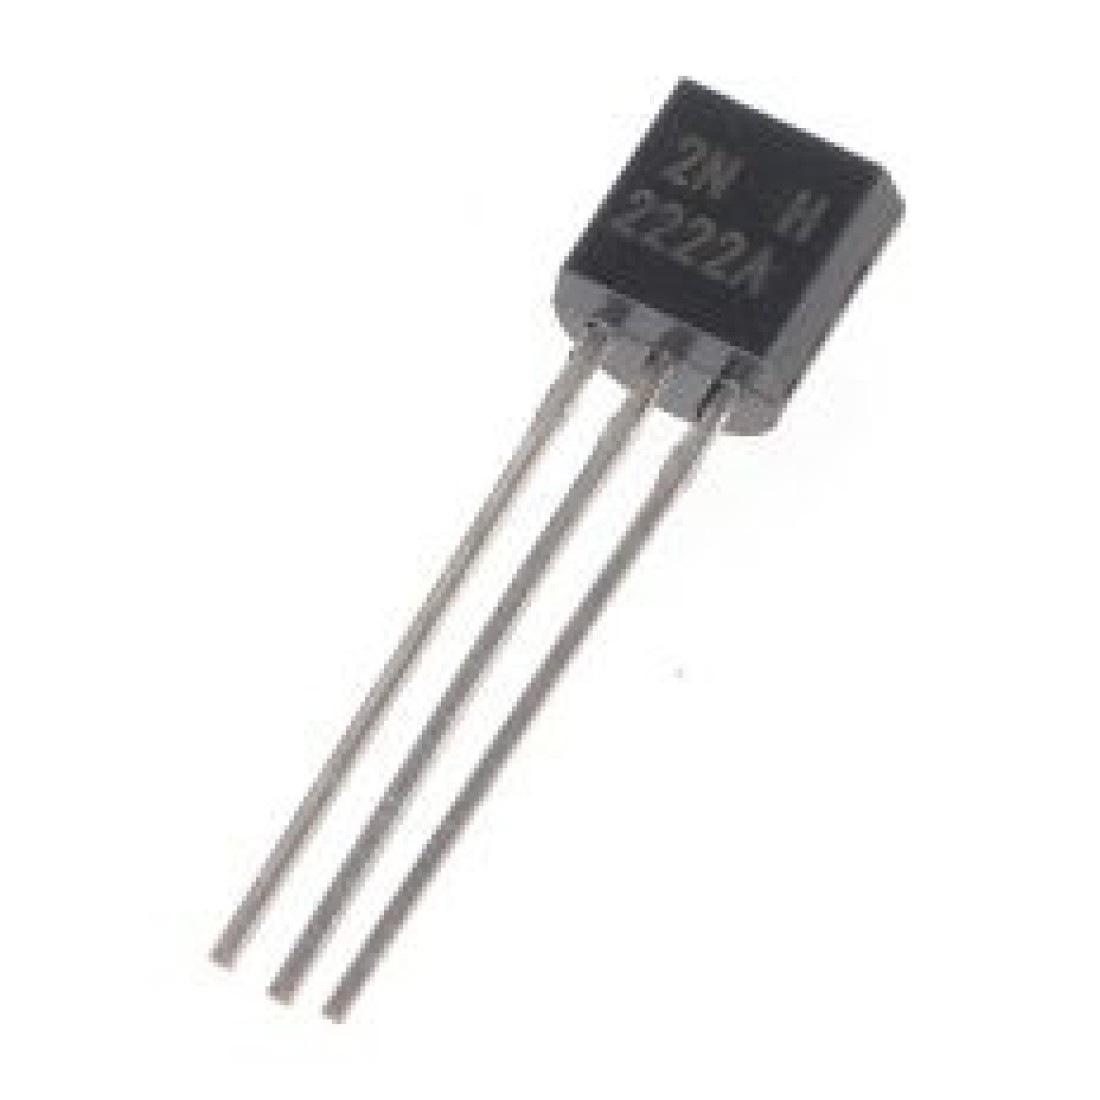 2n2222 transistor smd